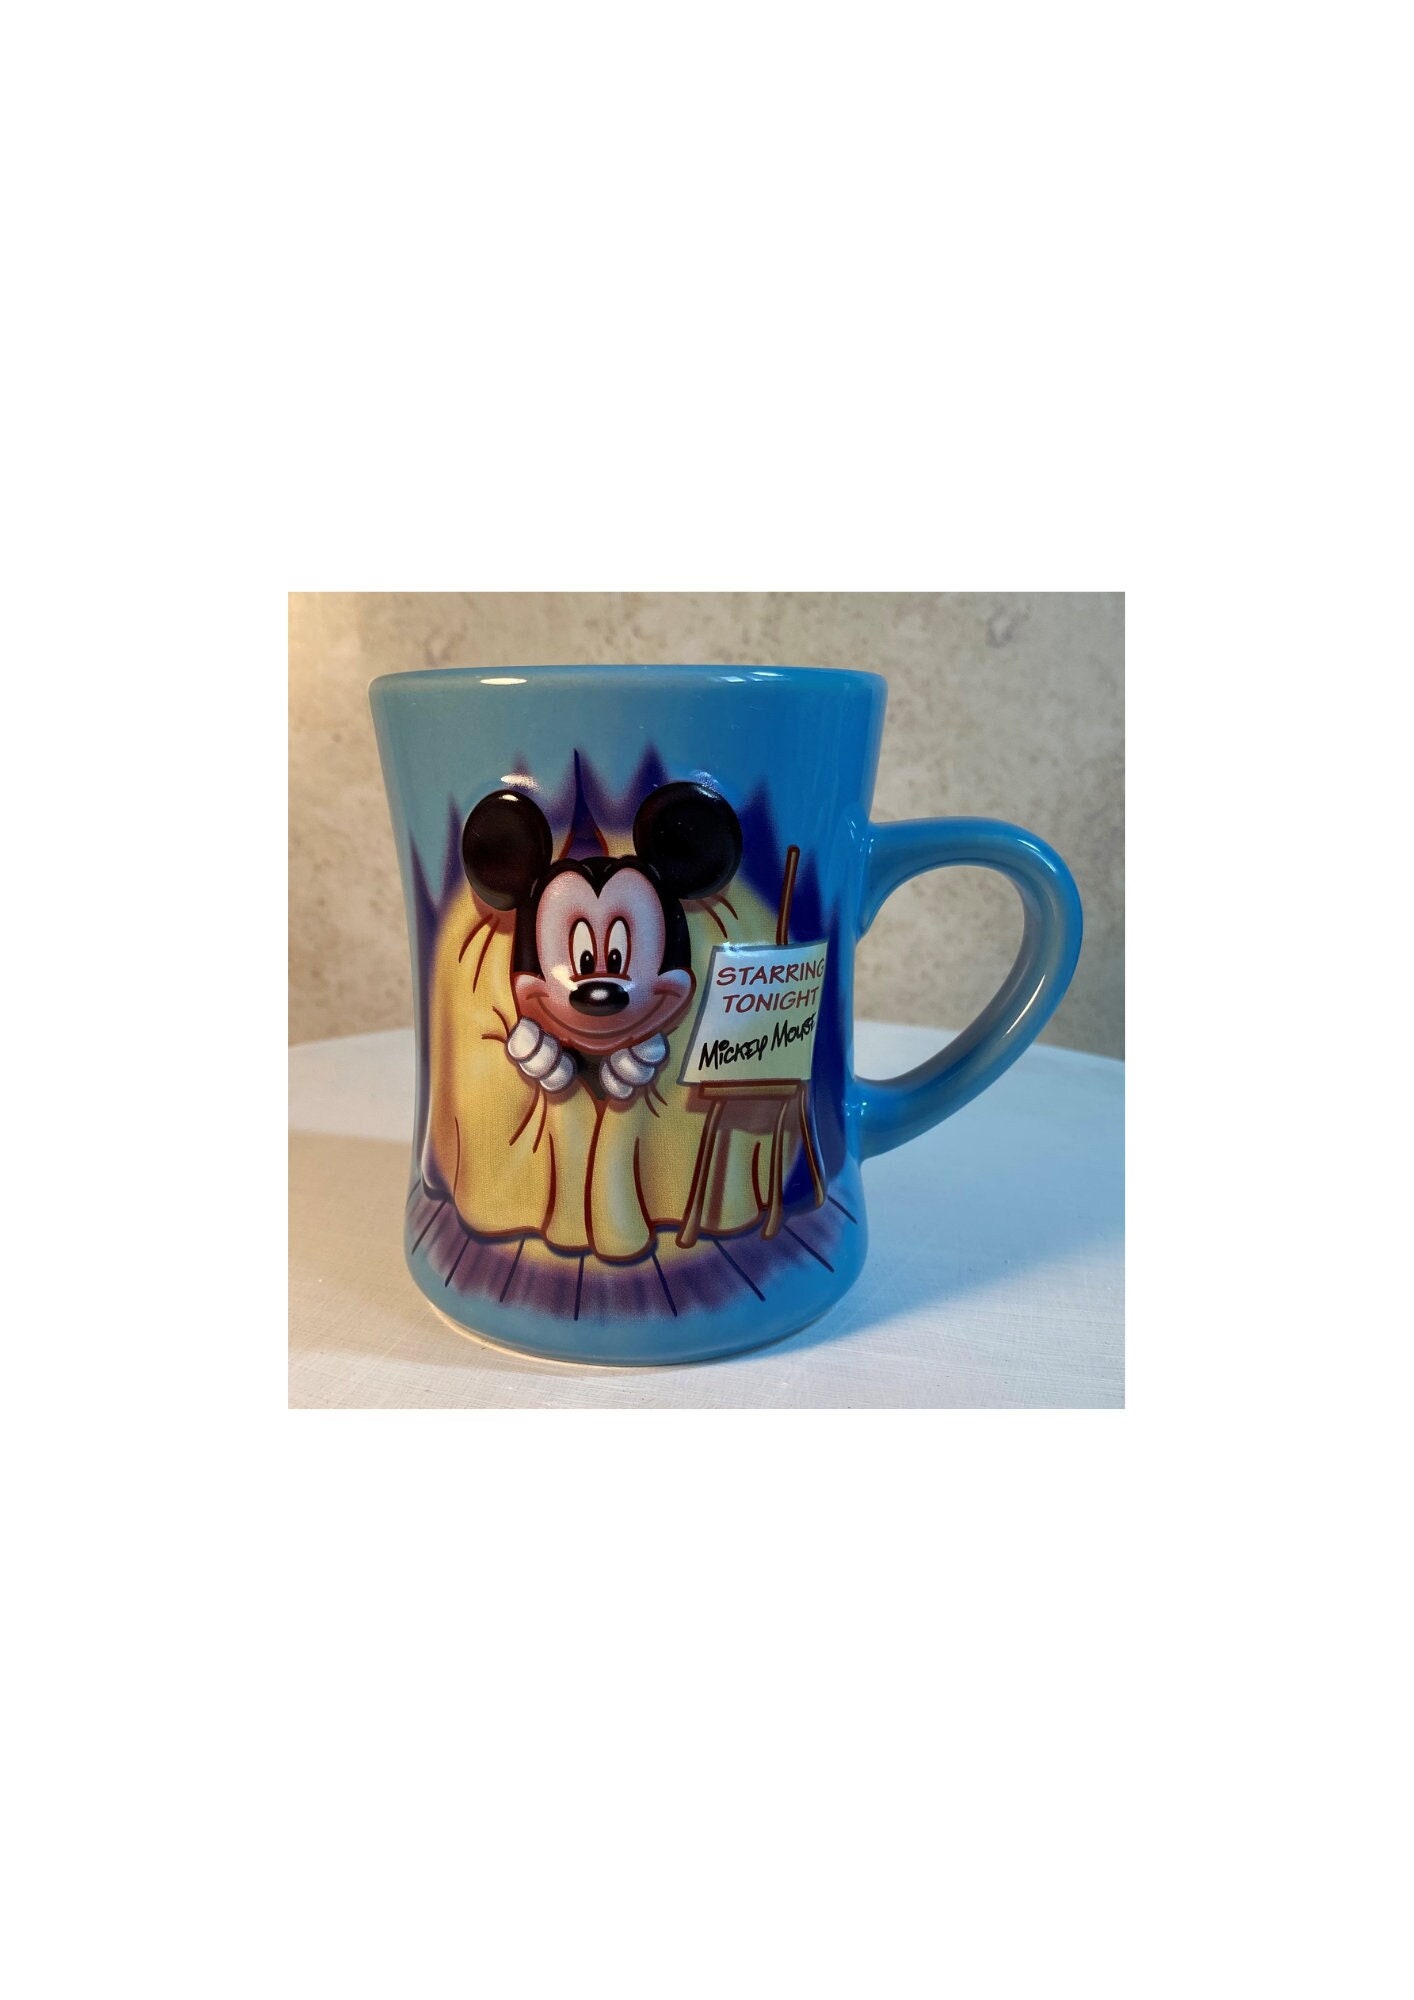  Disney Mickey Mouse 3D Starring Tonight Mickey Mouse Blue  Ceramic Coffee Tea Mug : Home & Kitchen